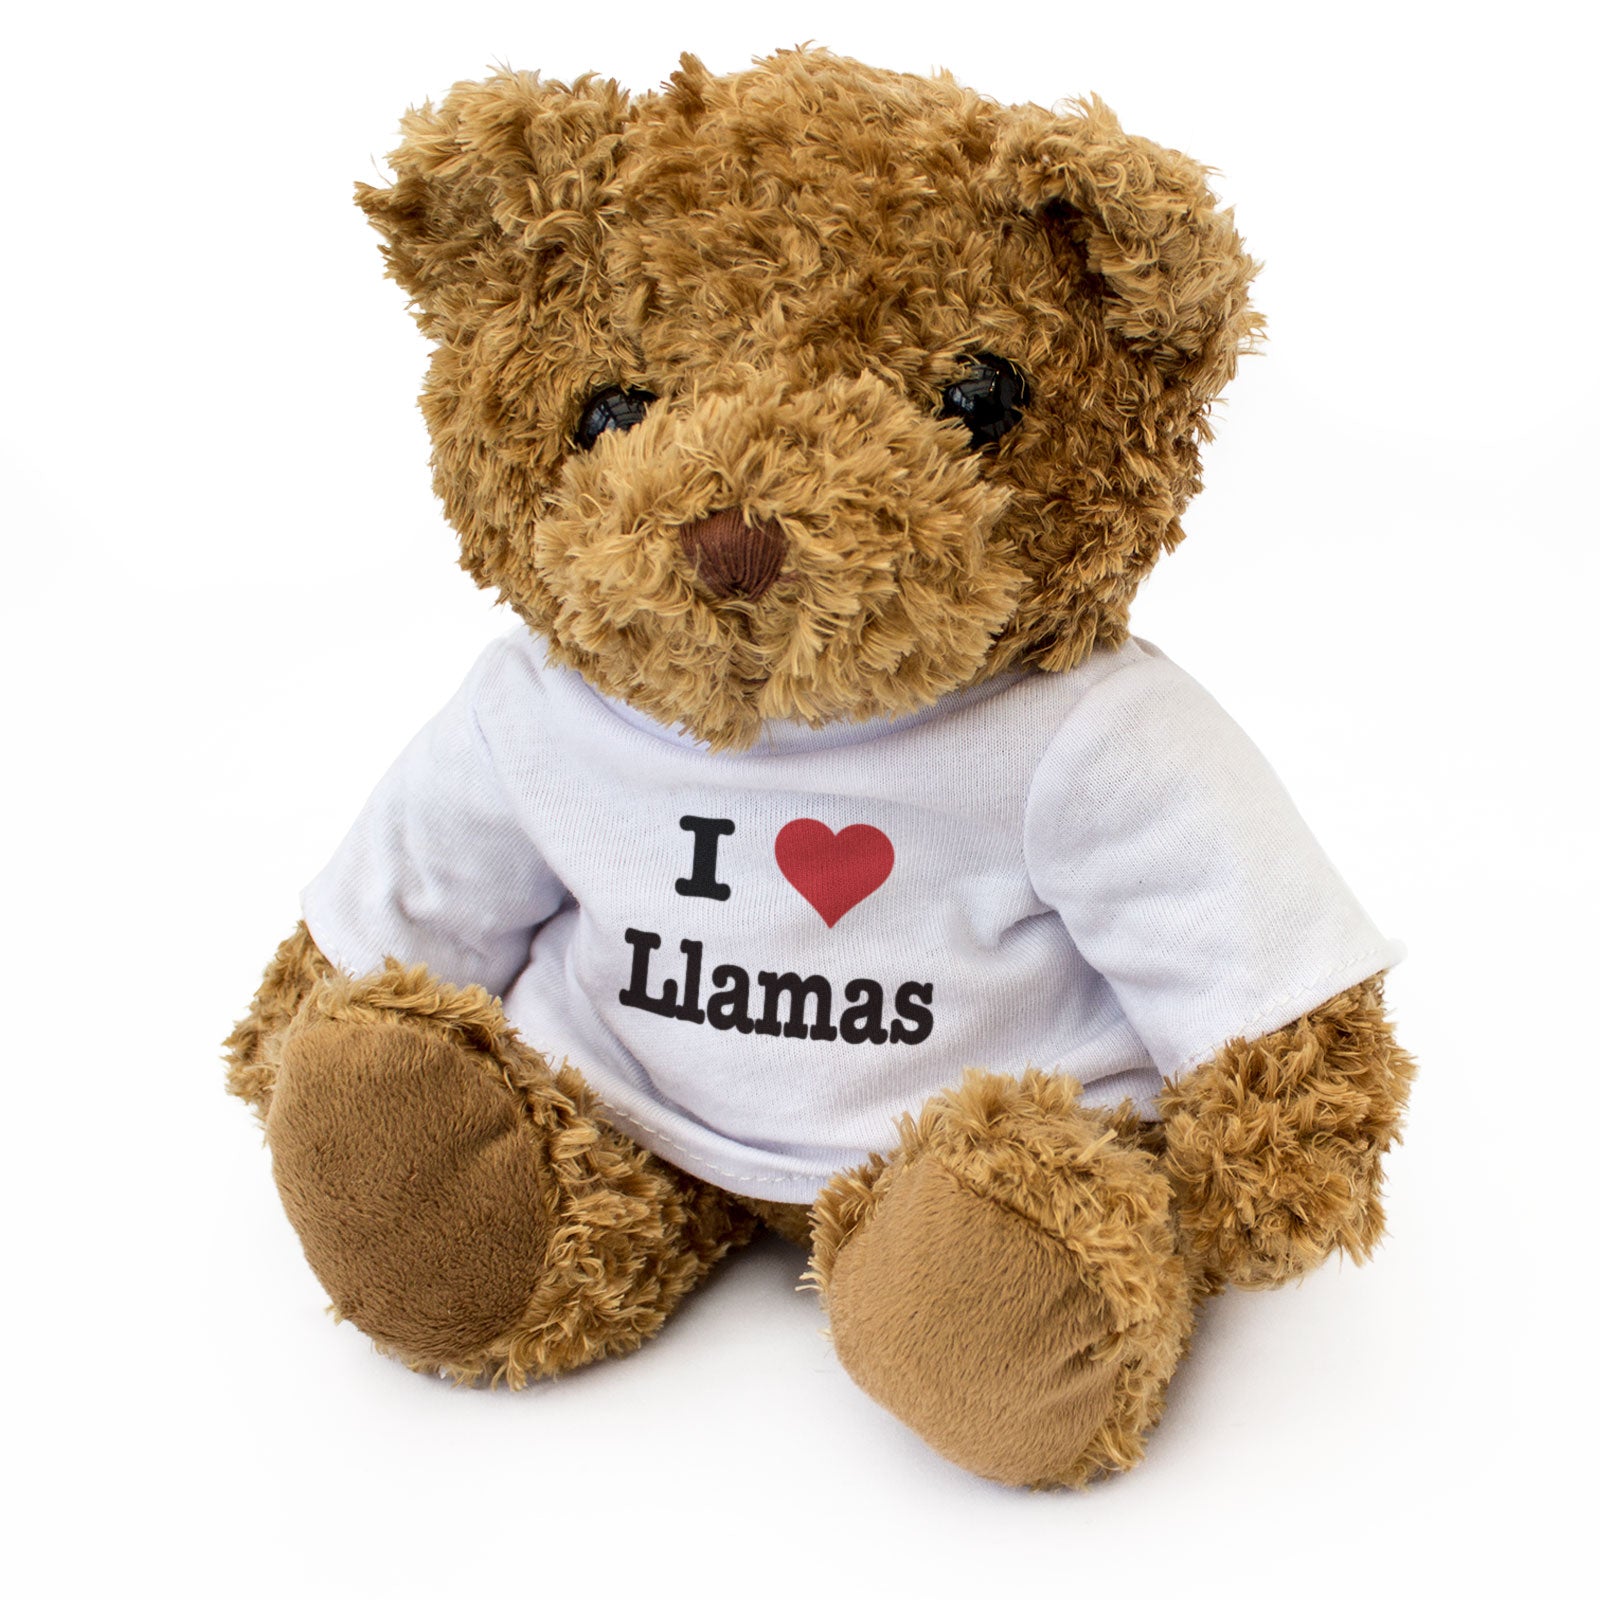 I Love Llamas - Teddy Bear